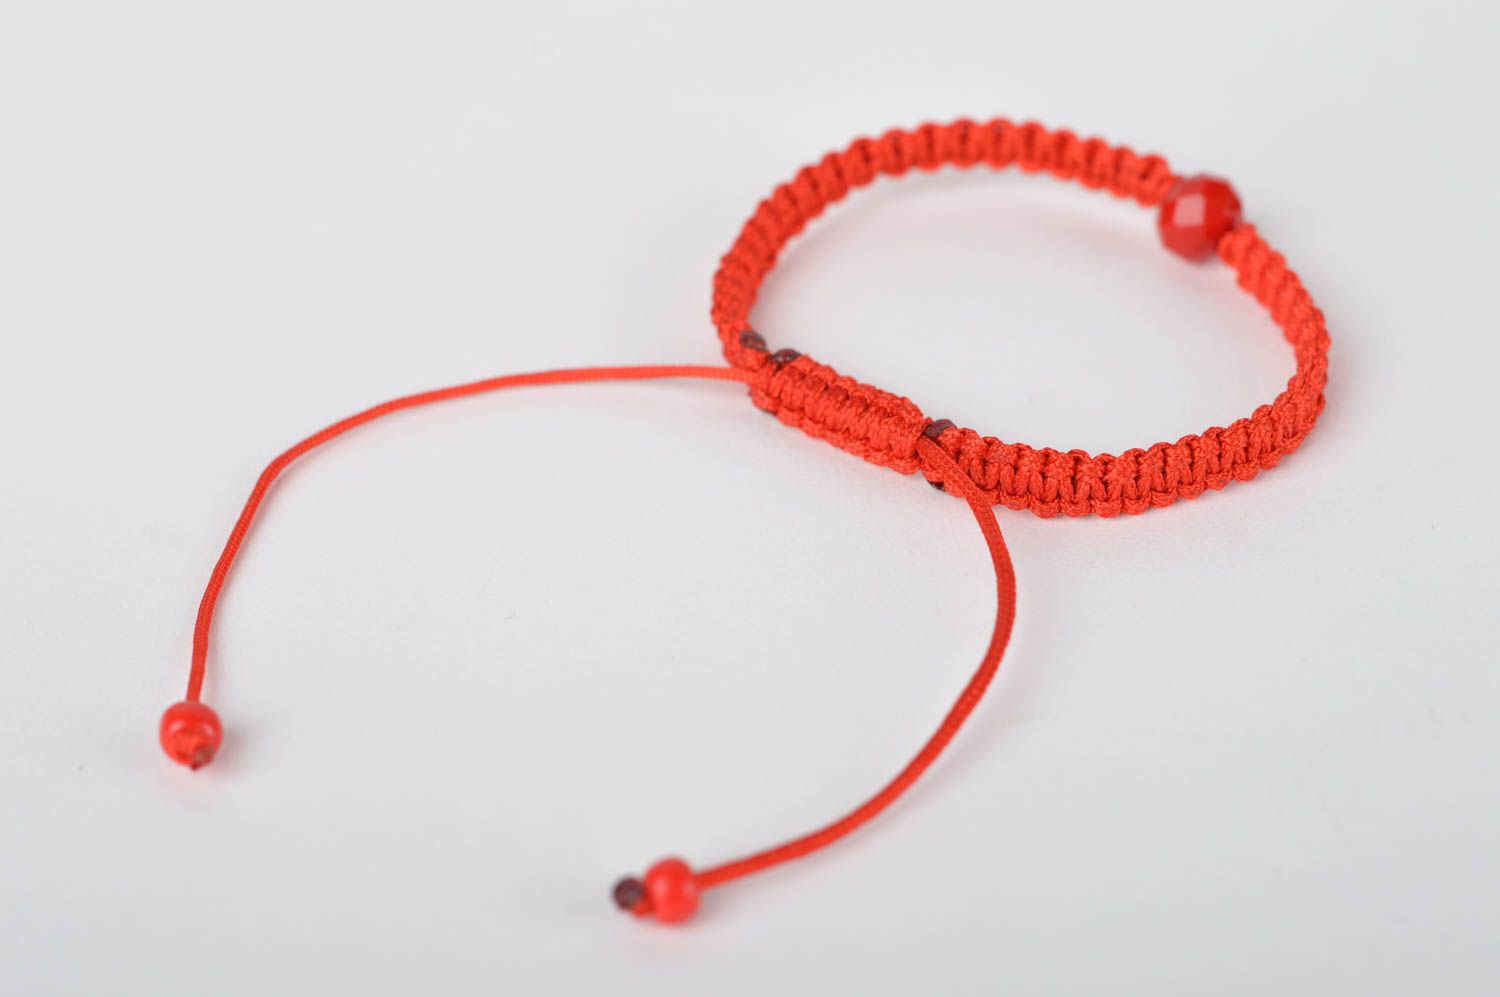 Stylish handmade textile bracelet wrist bracelet designs fashion tips for her photo 5